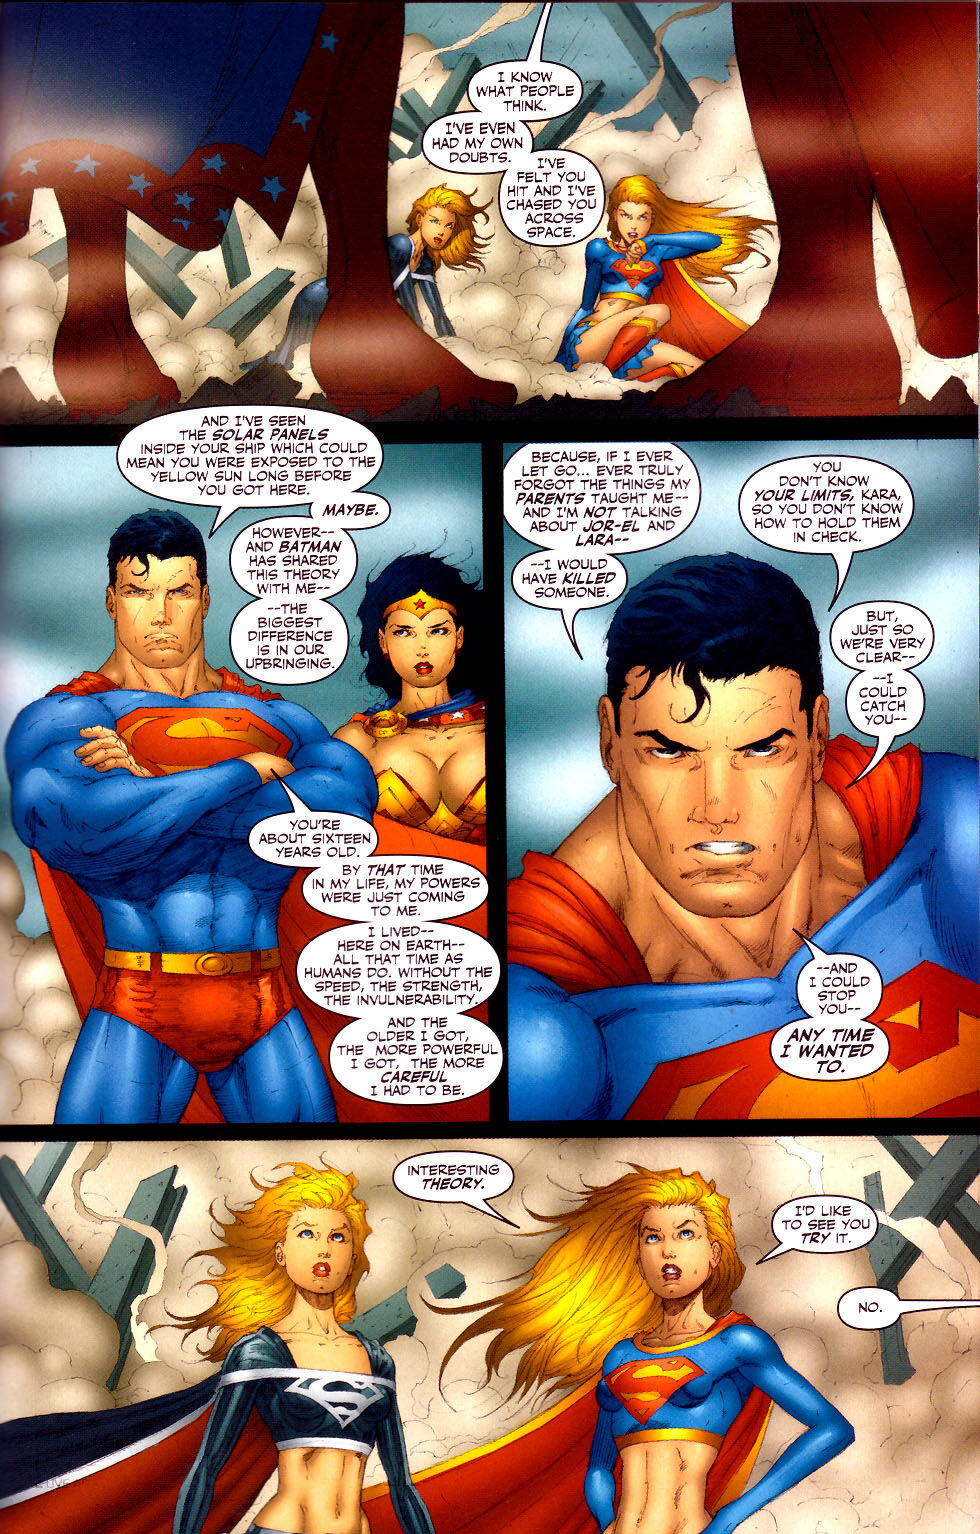 How would Billy Butcher view Superman, Batman, or Wonder Woman